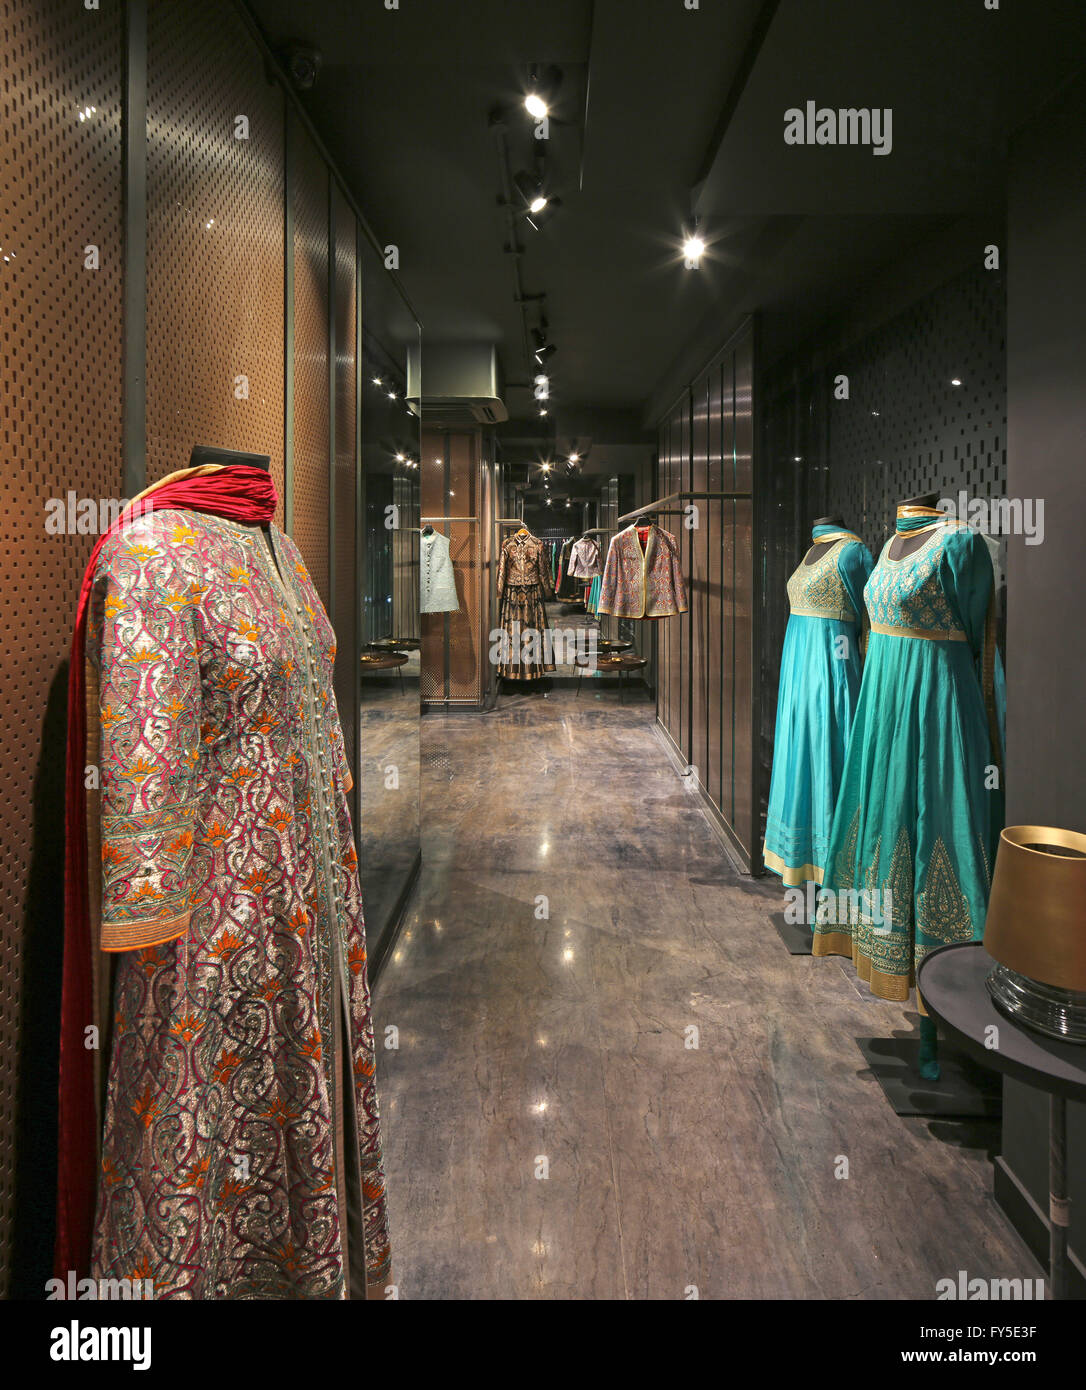 Overall interior view with colourful wedding saris. Abishek Gupta Shop, New Delhi, India. Architect: Studio Lotus, 2016. Stock Photo